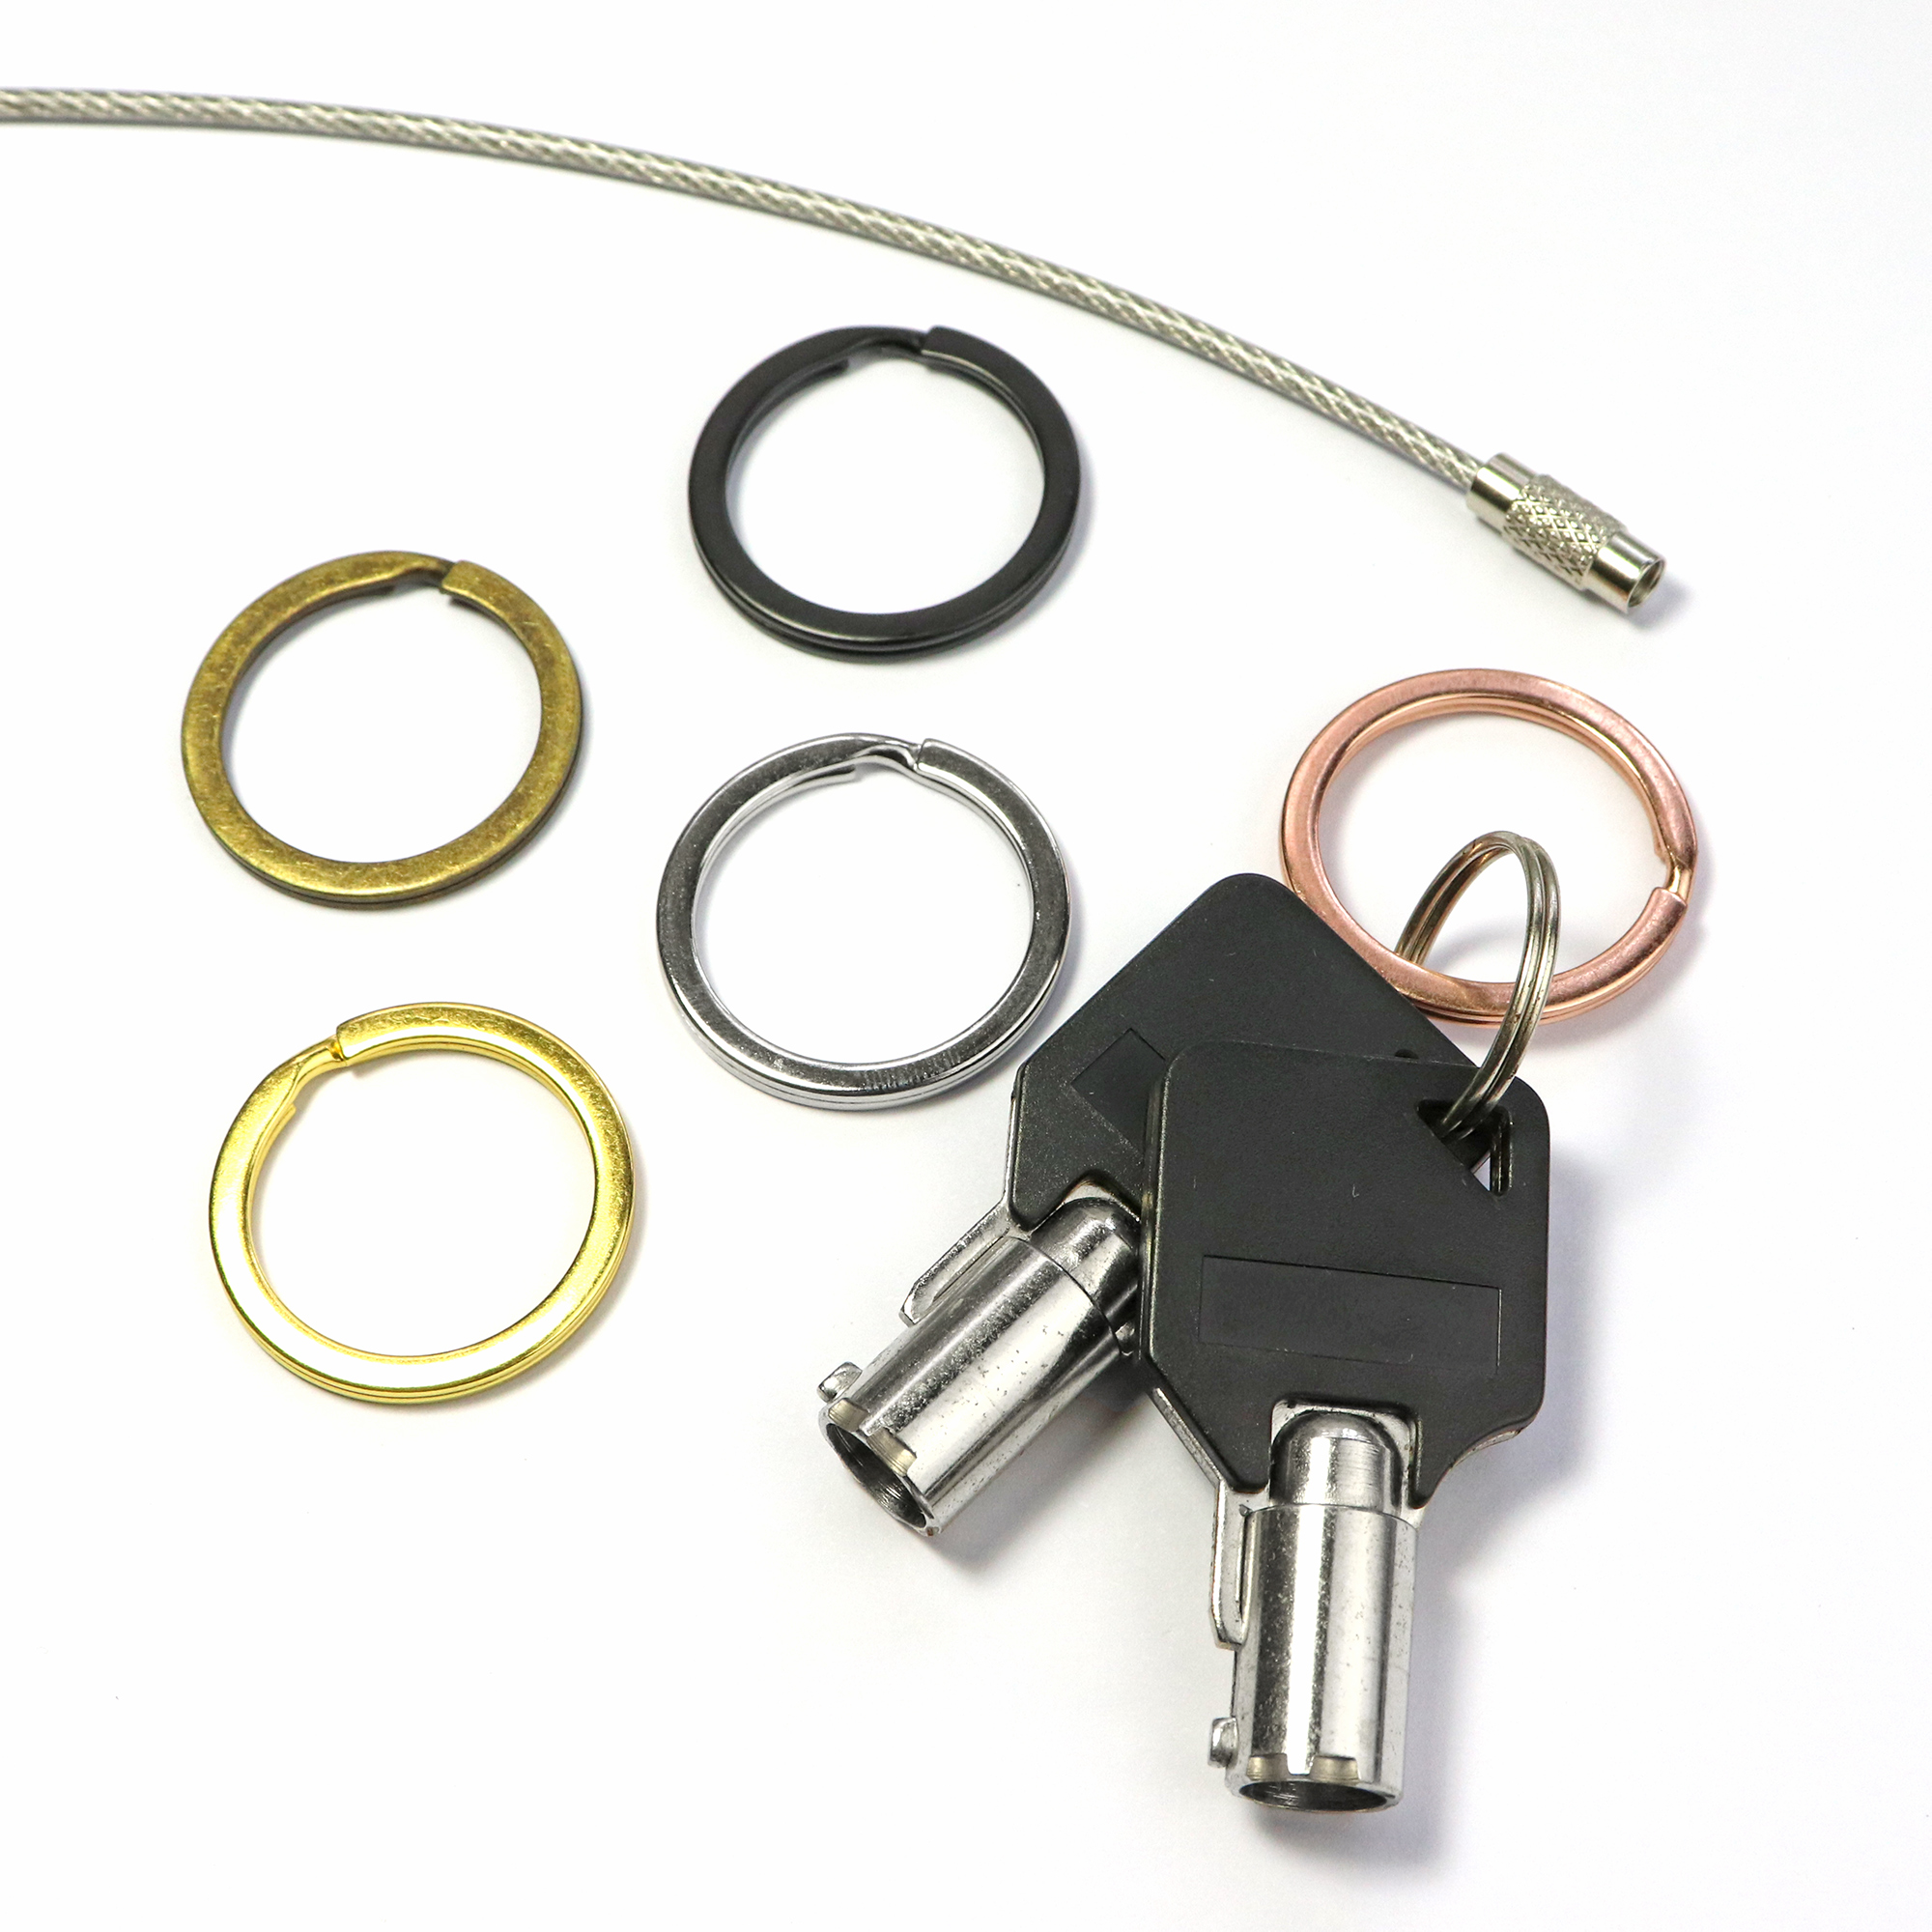 Millennial Essentials Flat Key Rings Key Chain Metal Split Ring 40pcs (Round 1 inch Diameter), for Home Car Keys Organization, Arts & Crafts, Lanyards